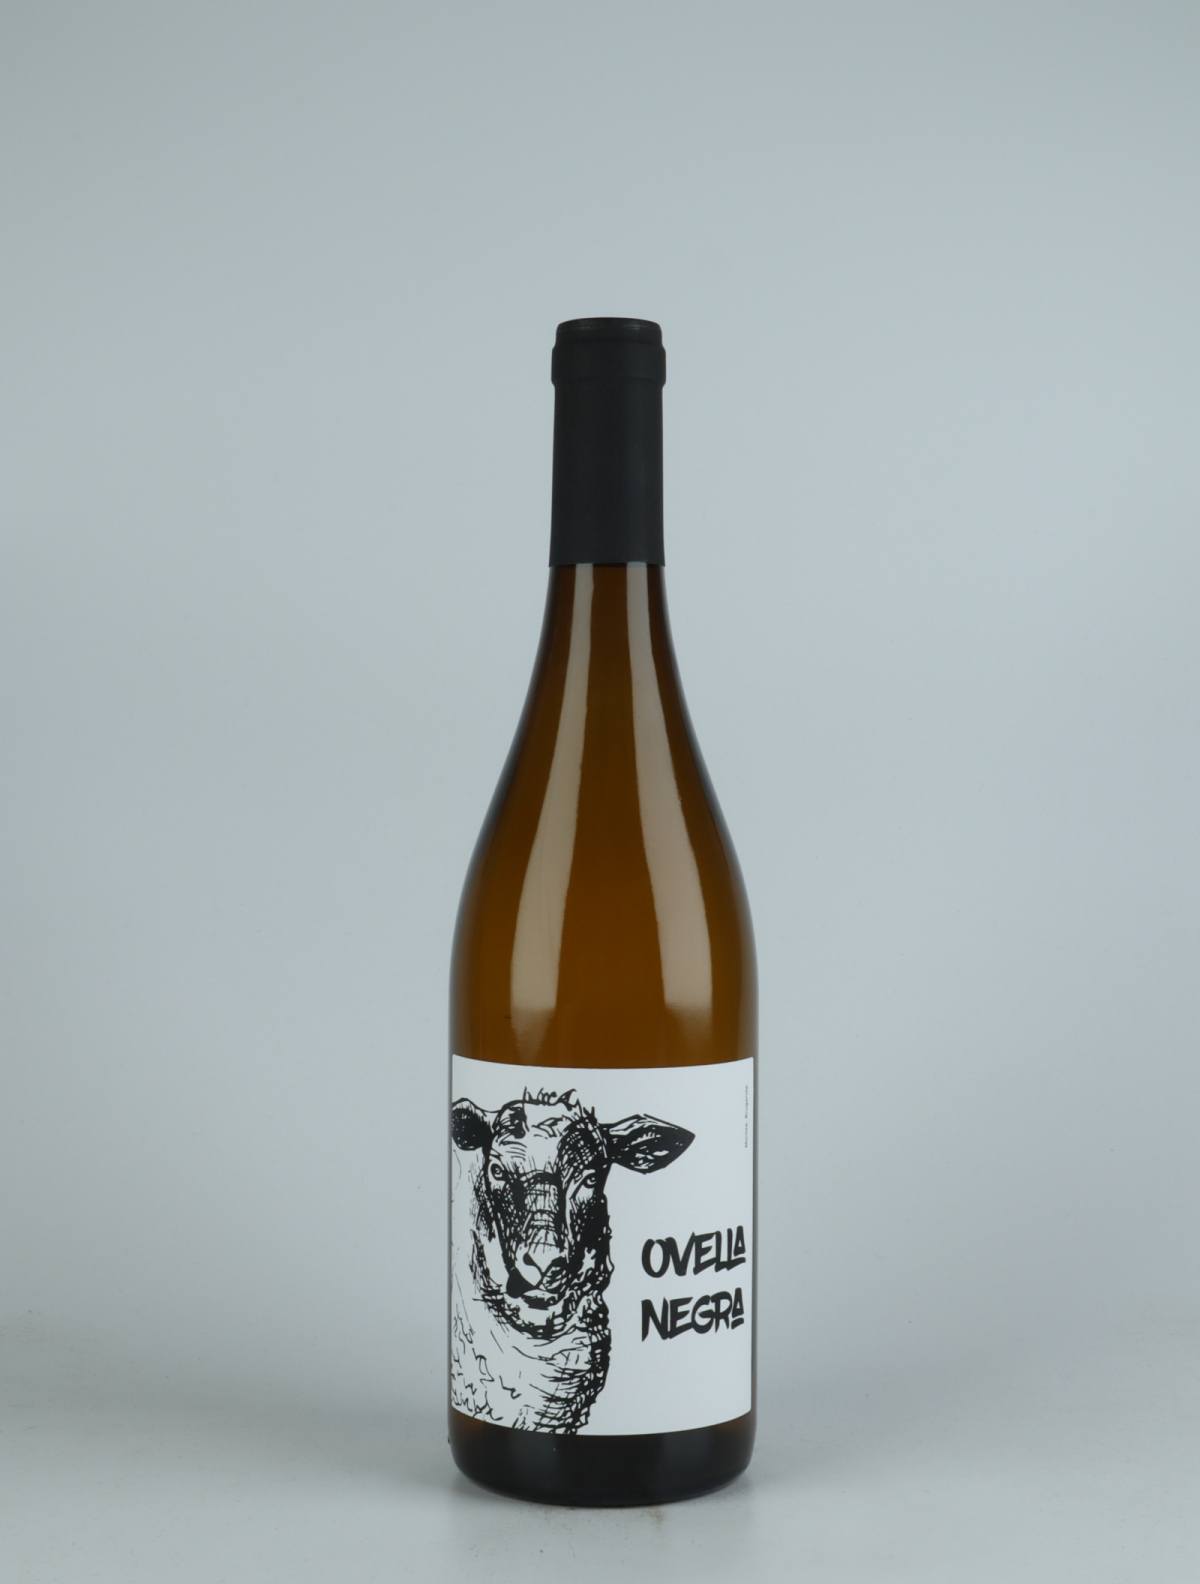 En flaske 2021 Ovella Negra Orange vin fra Mas Candí, Penedès i Spanien